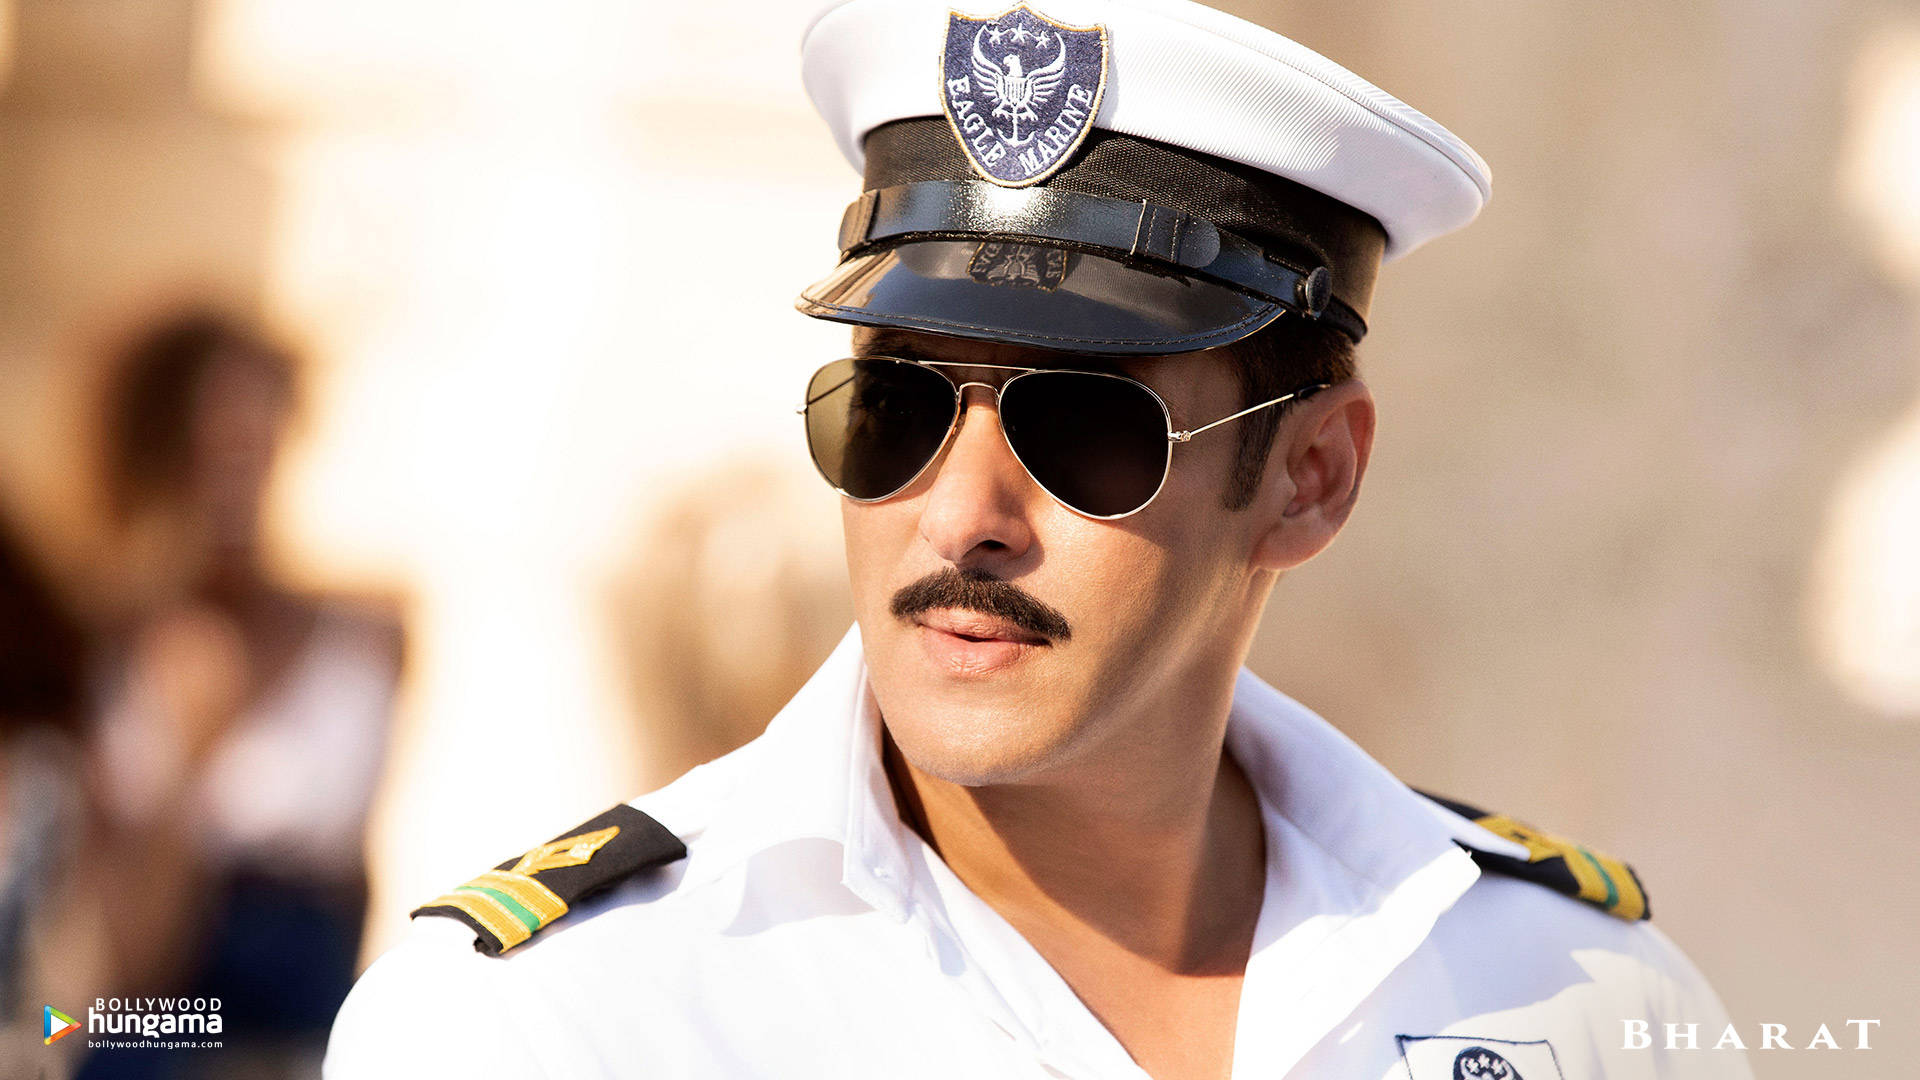 Salman Khan As Policeman In Bharat